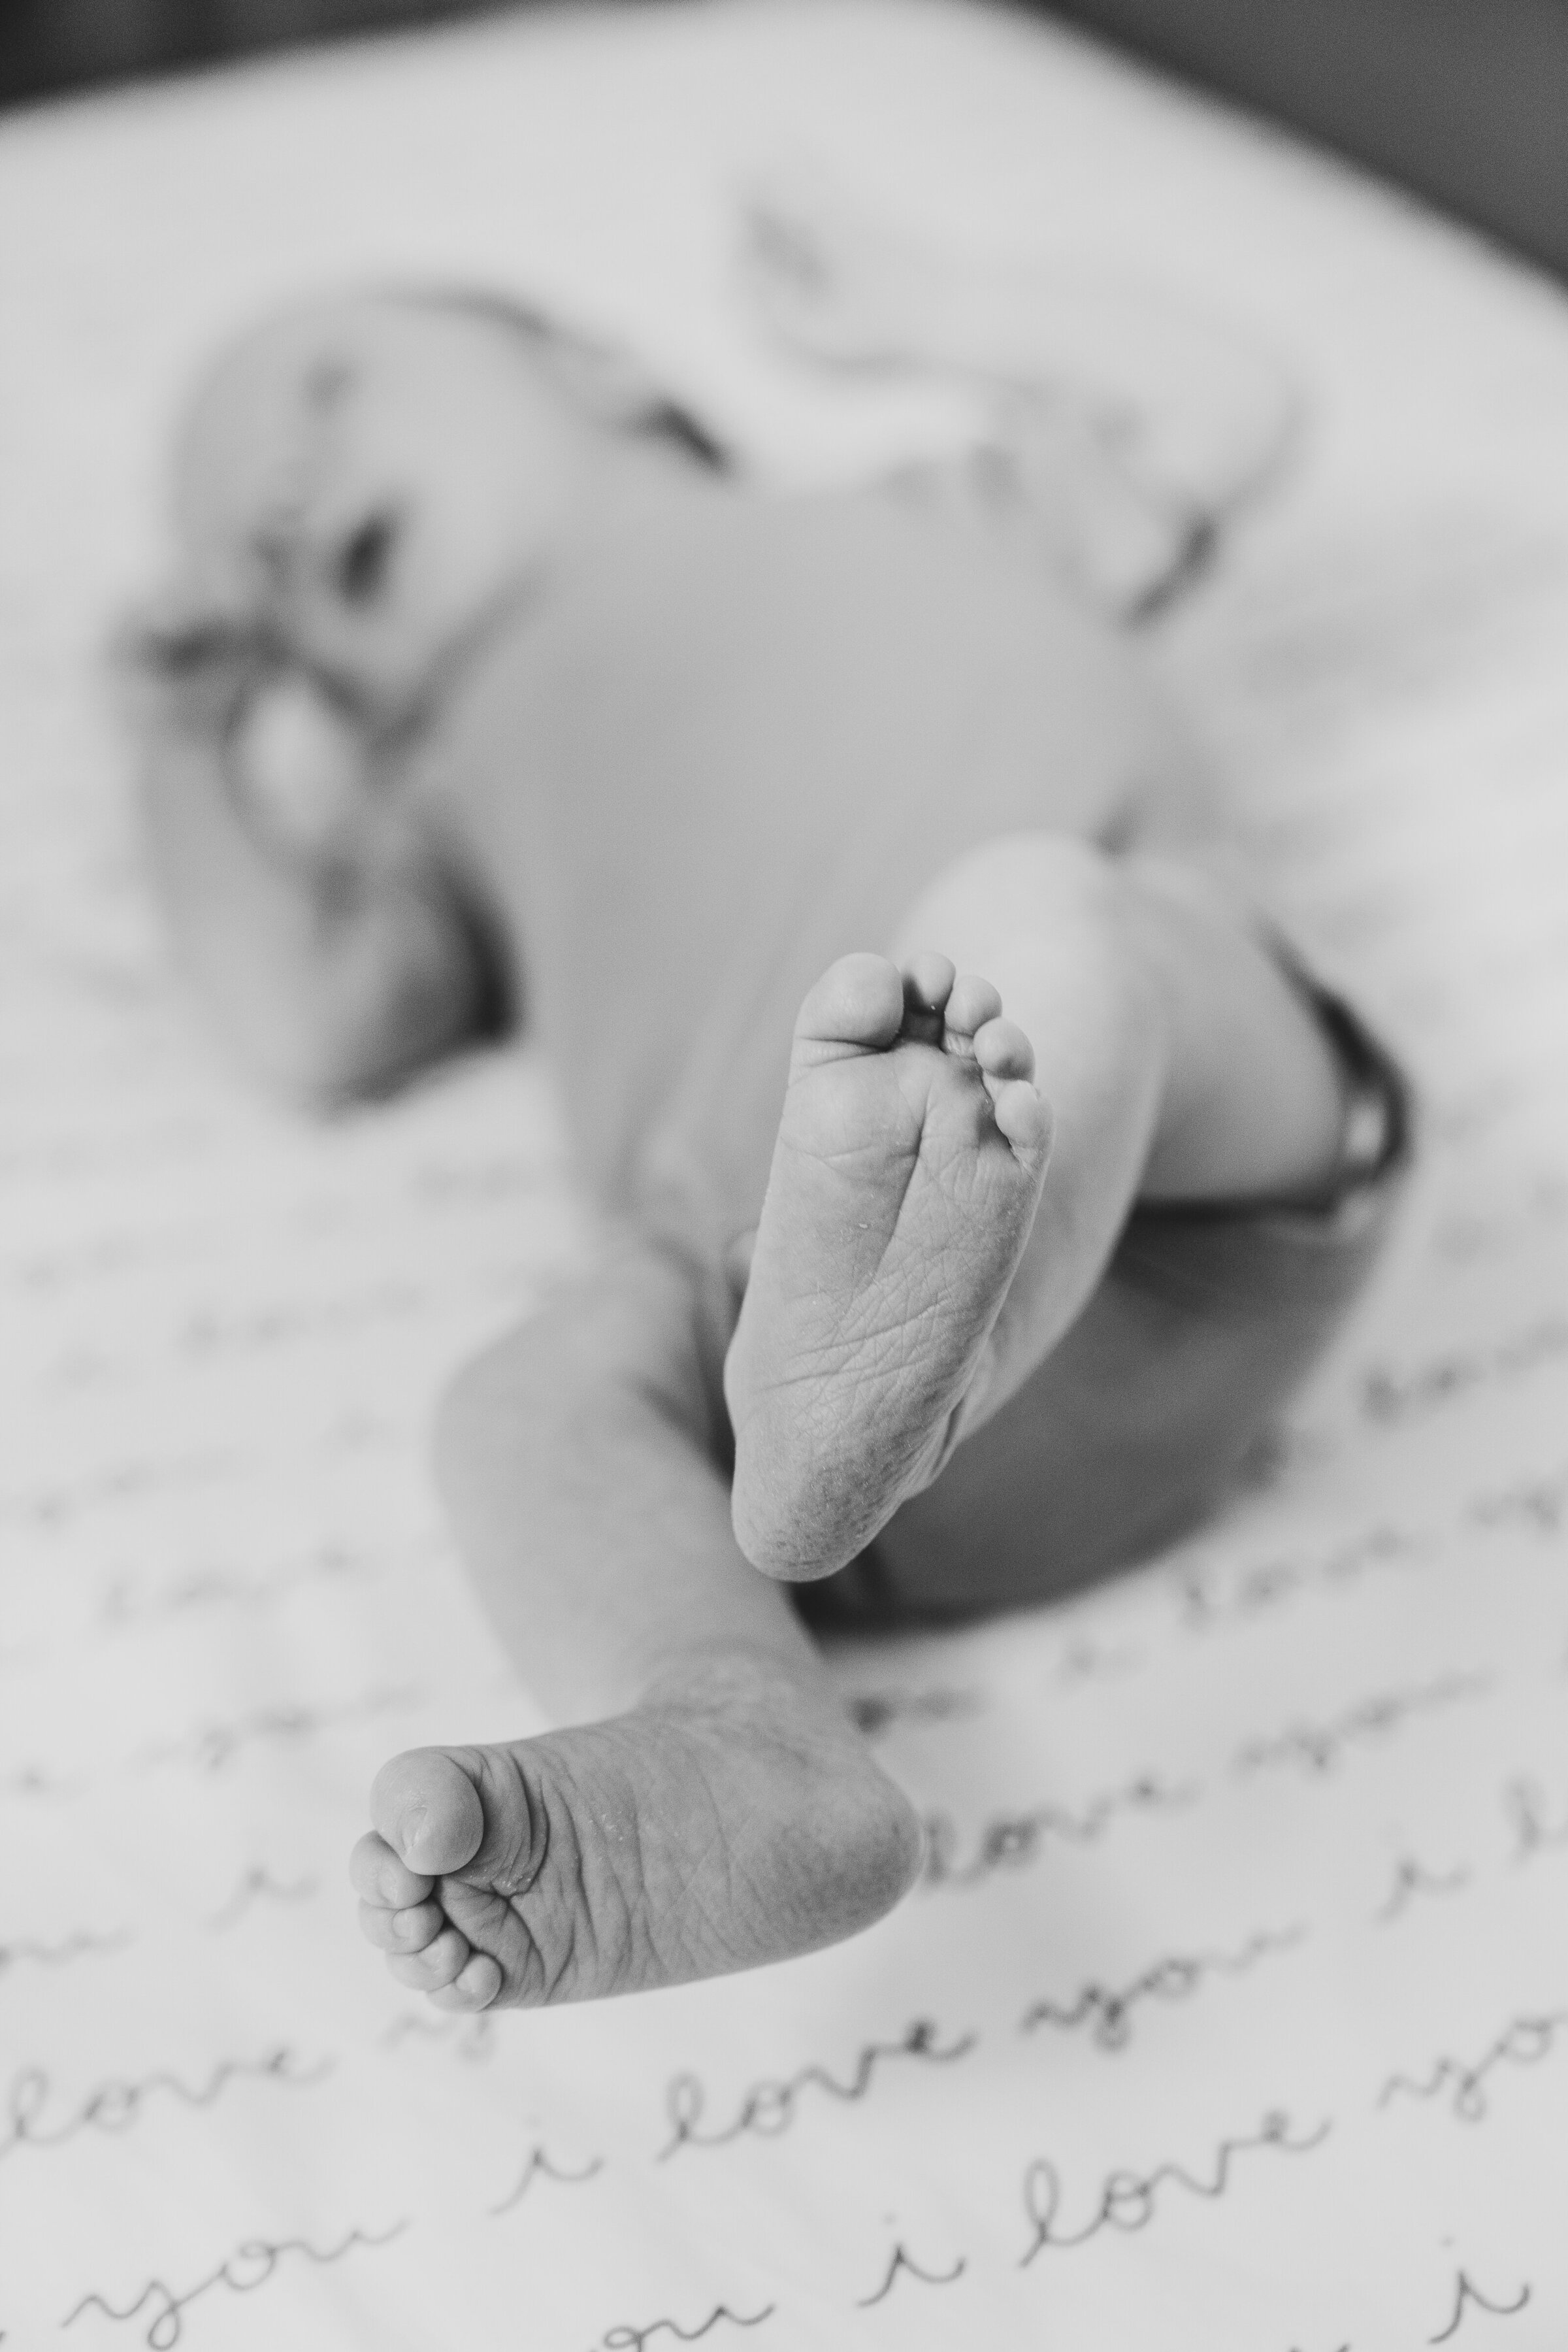 A photo of a baby's tiny feet